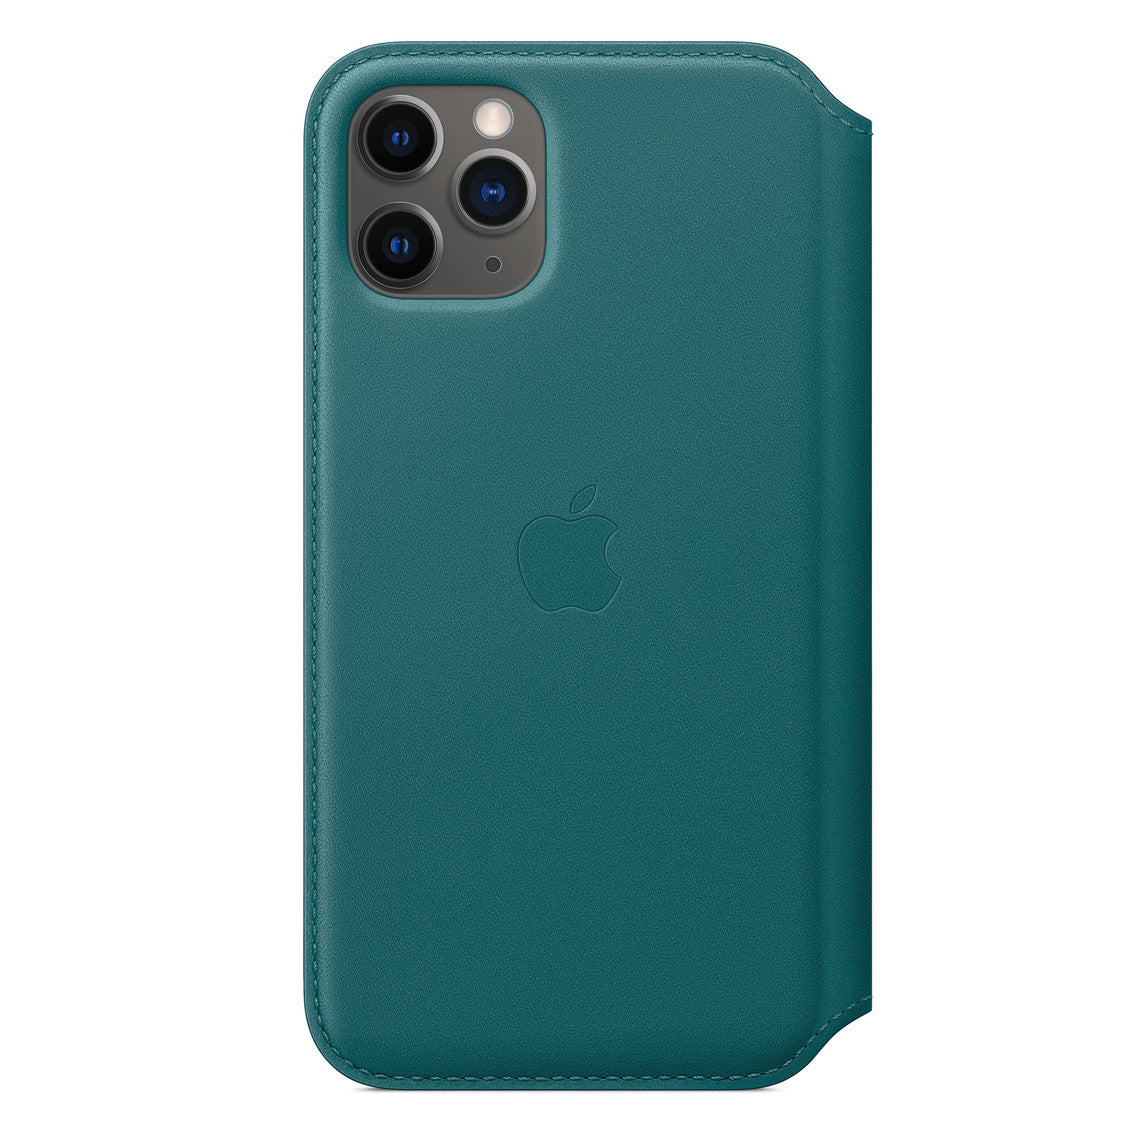 Apple iPhone 11 Pro Leather Folio - Peacock - Brand New